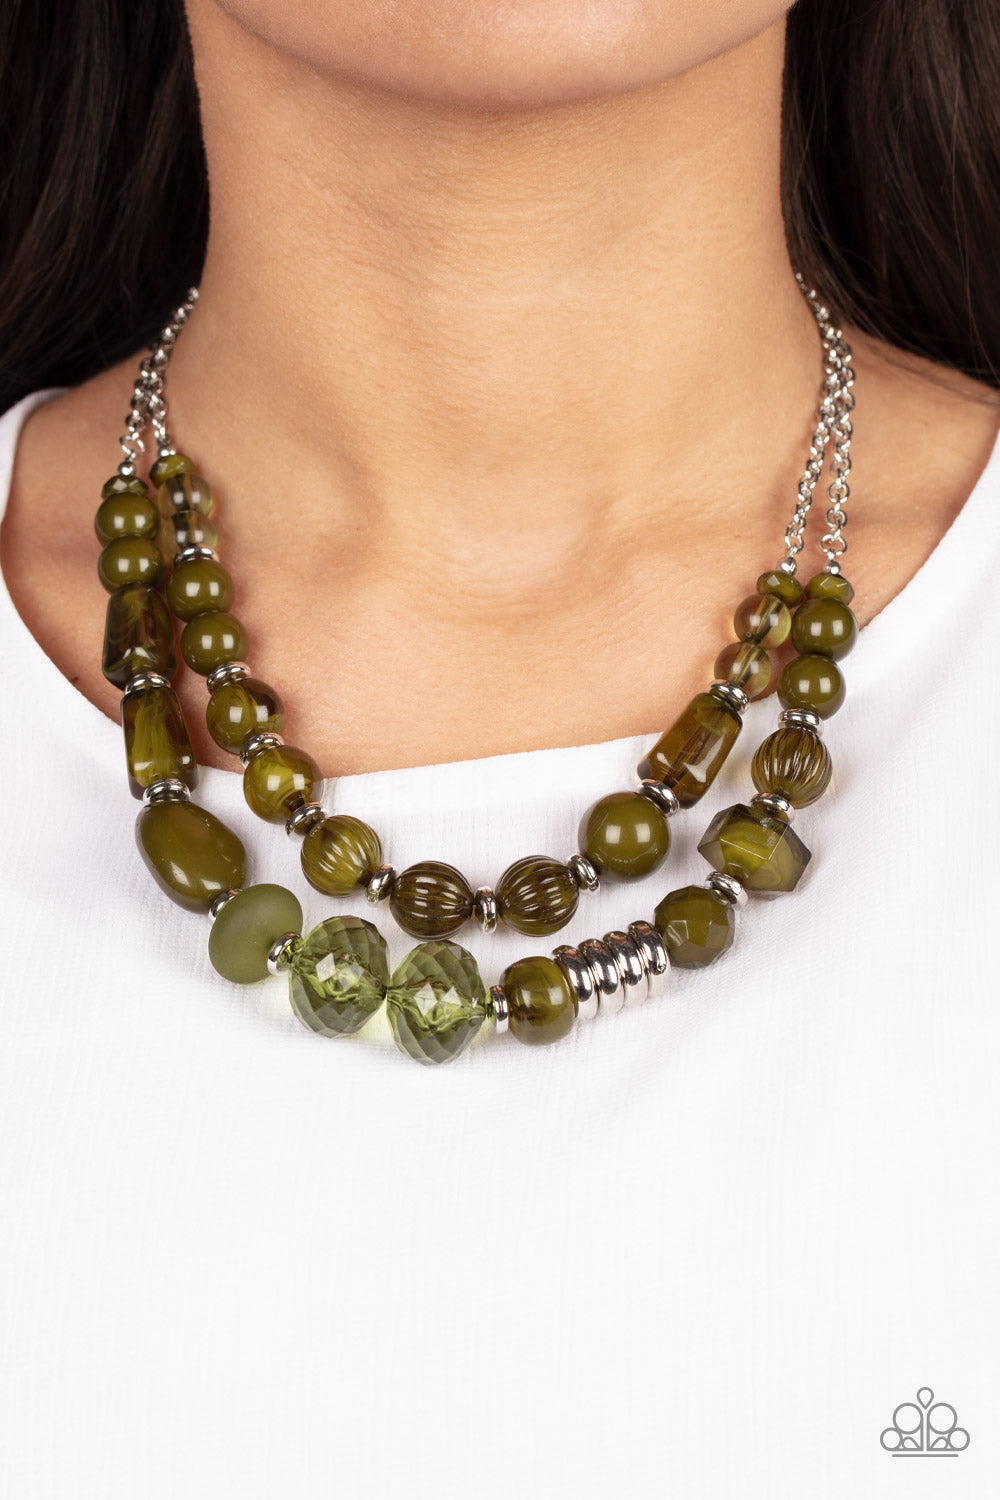 Paparazzi Pina Colada Paradise Green Necklace $5 Jewelry #P2ST-GRXX-098XX. Free Shipping!